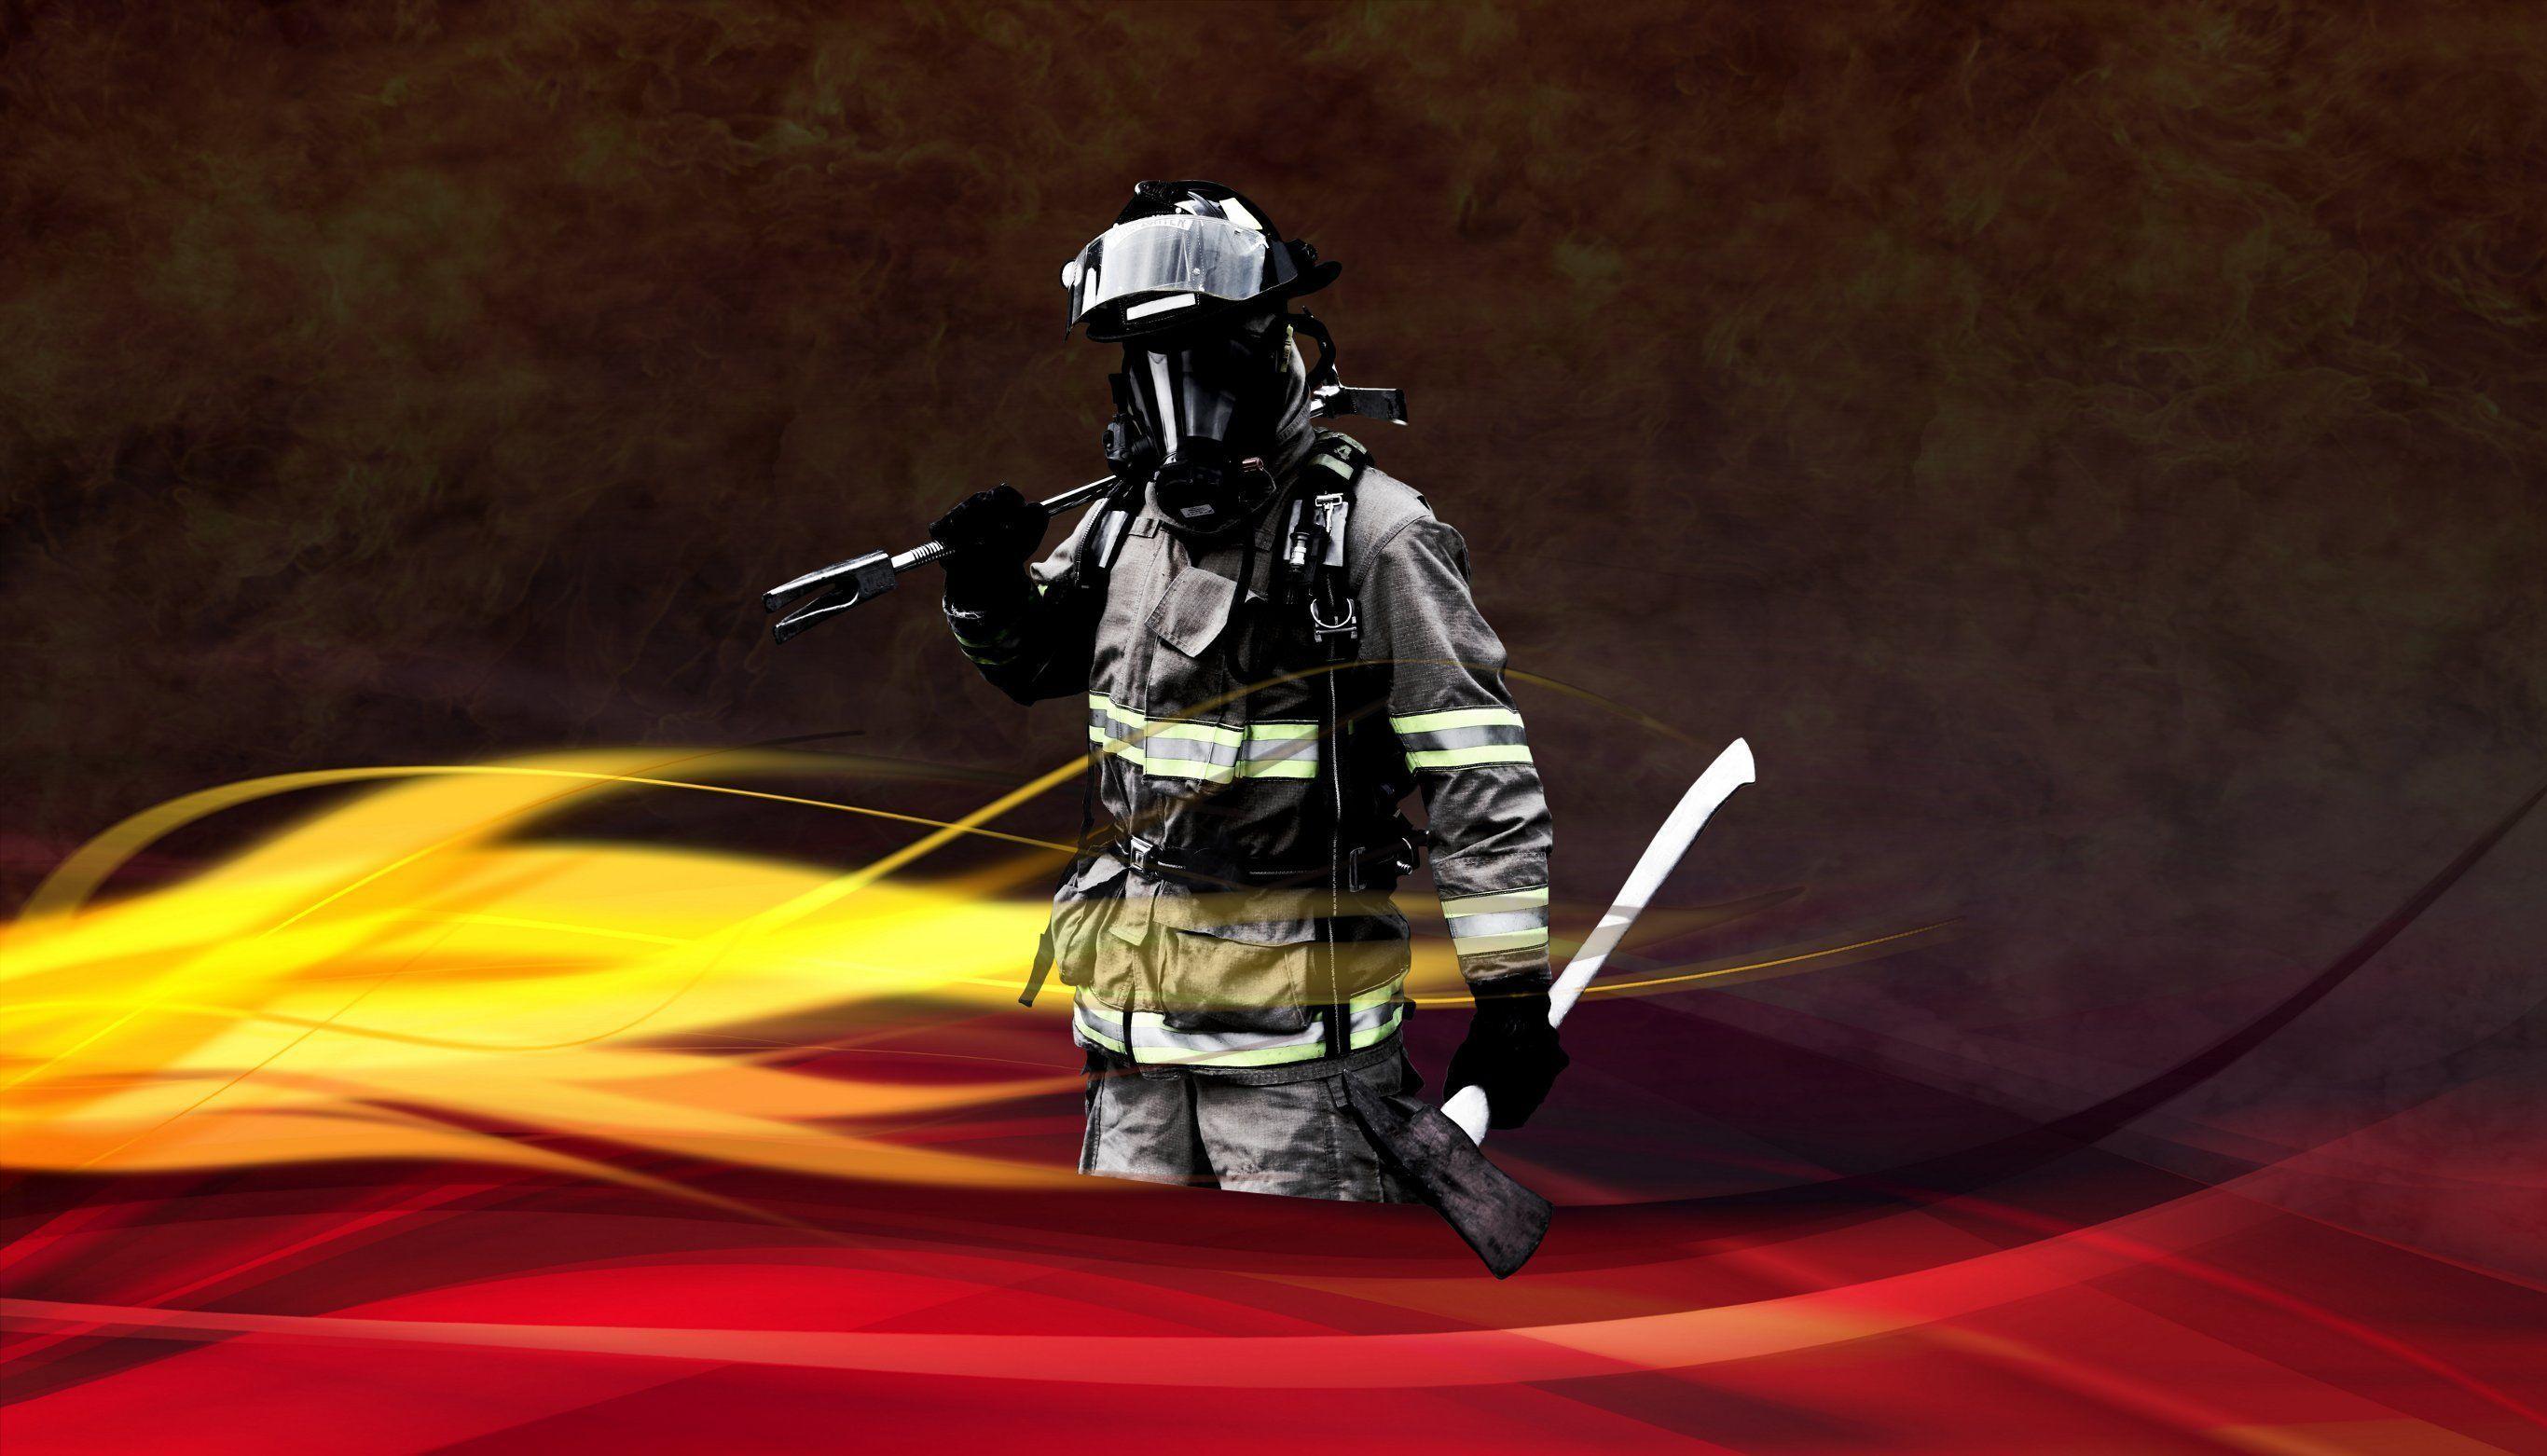 Firefighter Wallpaper